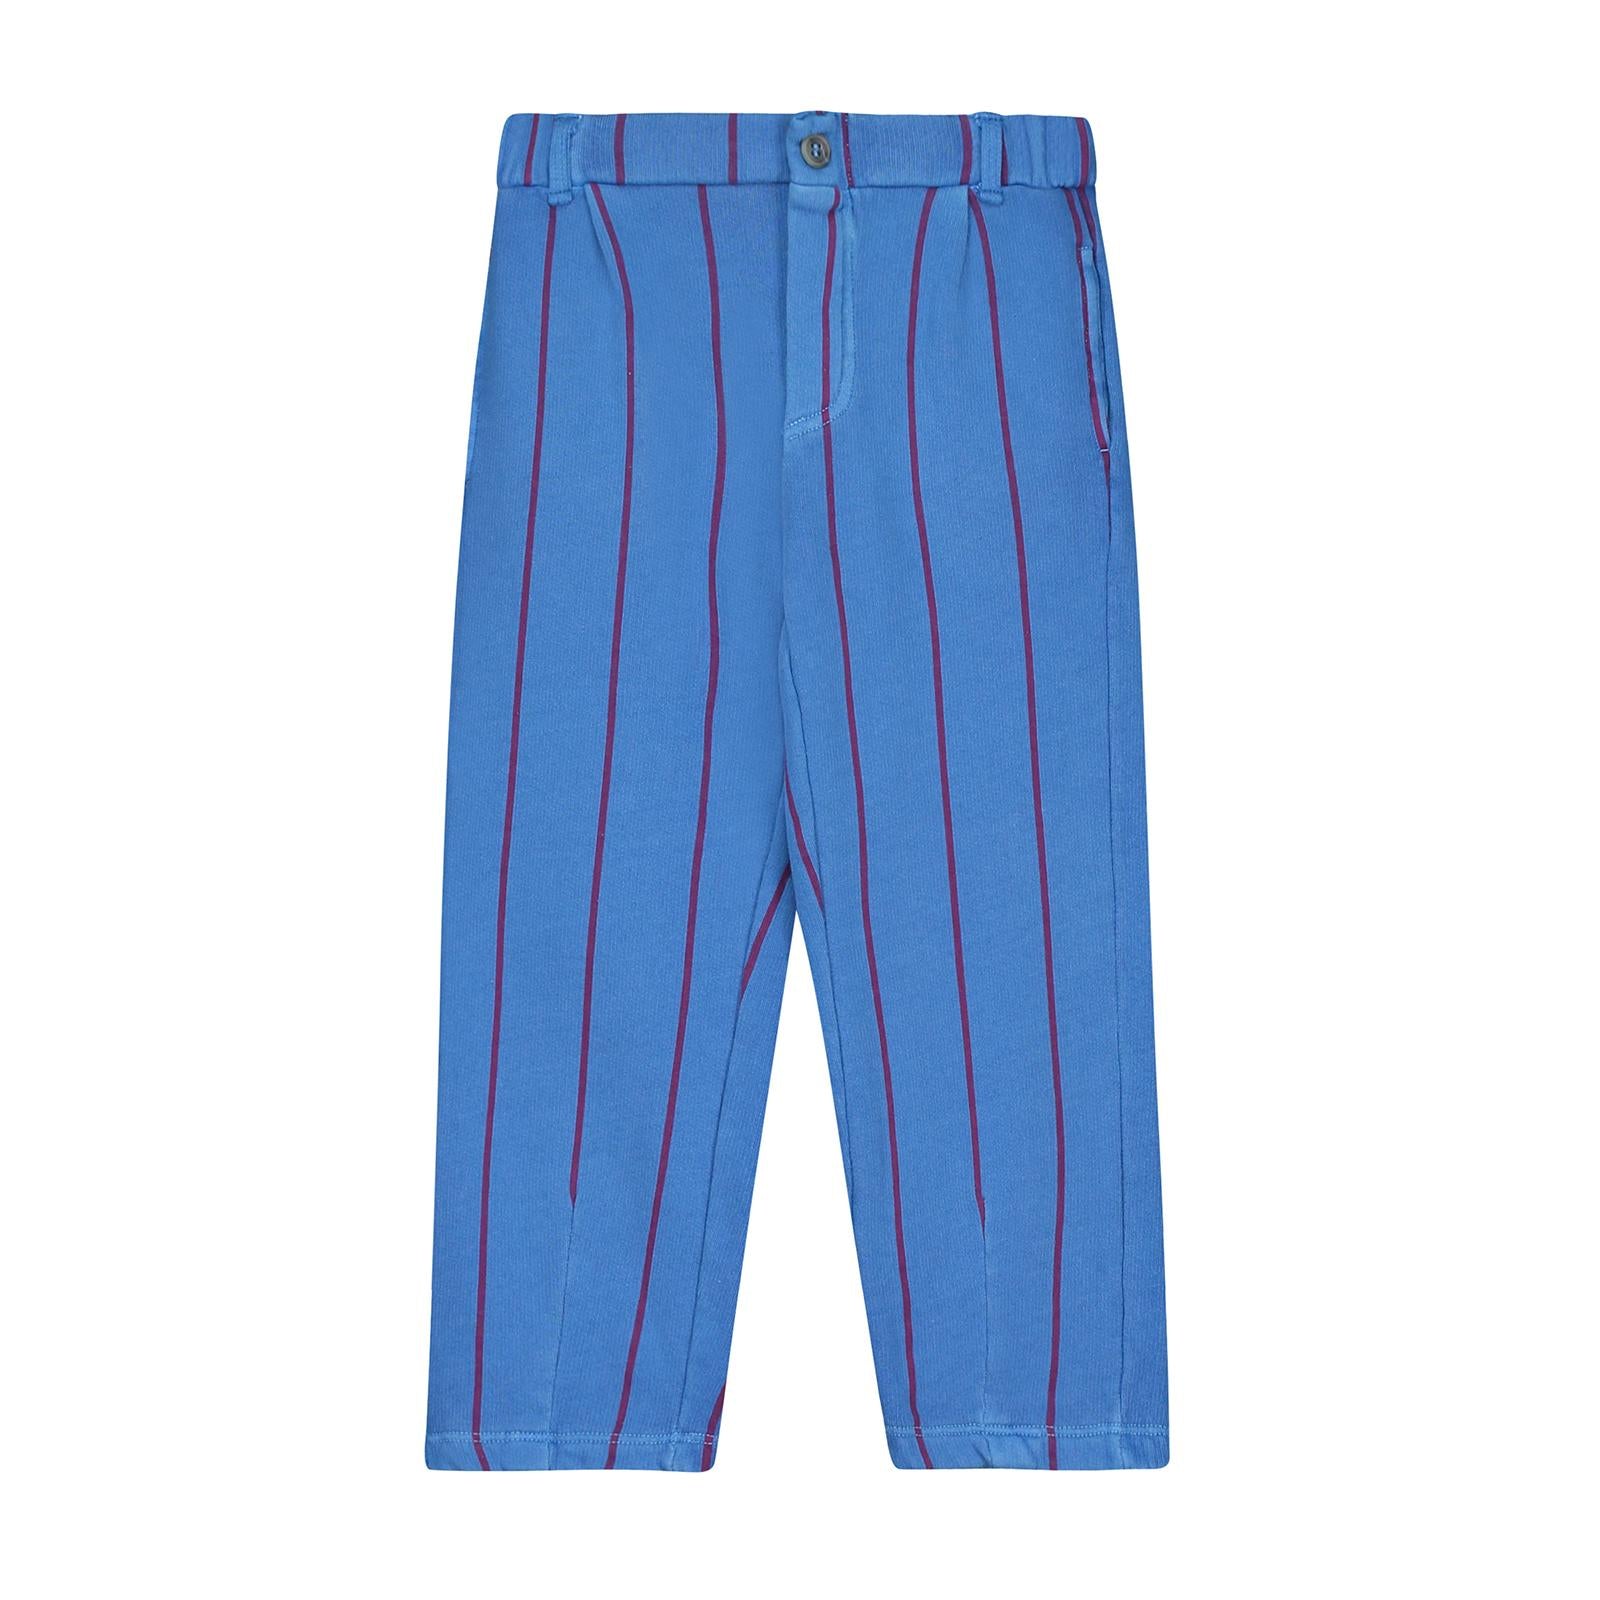 Full-length Dark/Light Blue Striped Cotton Trousers | Intimissimi